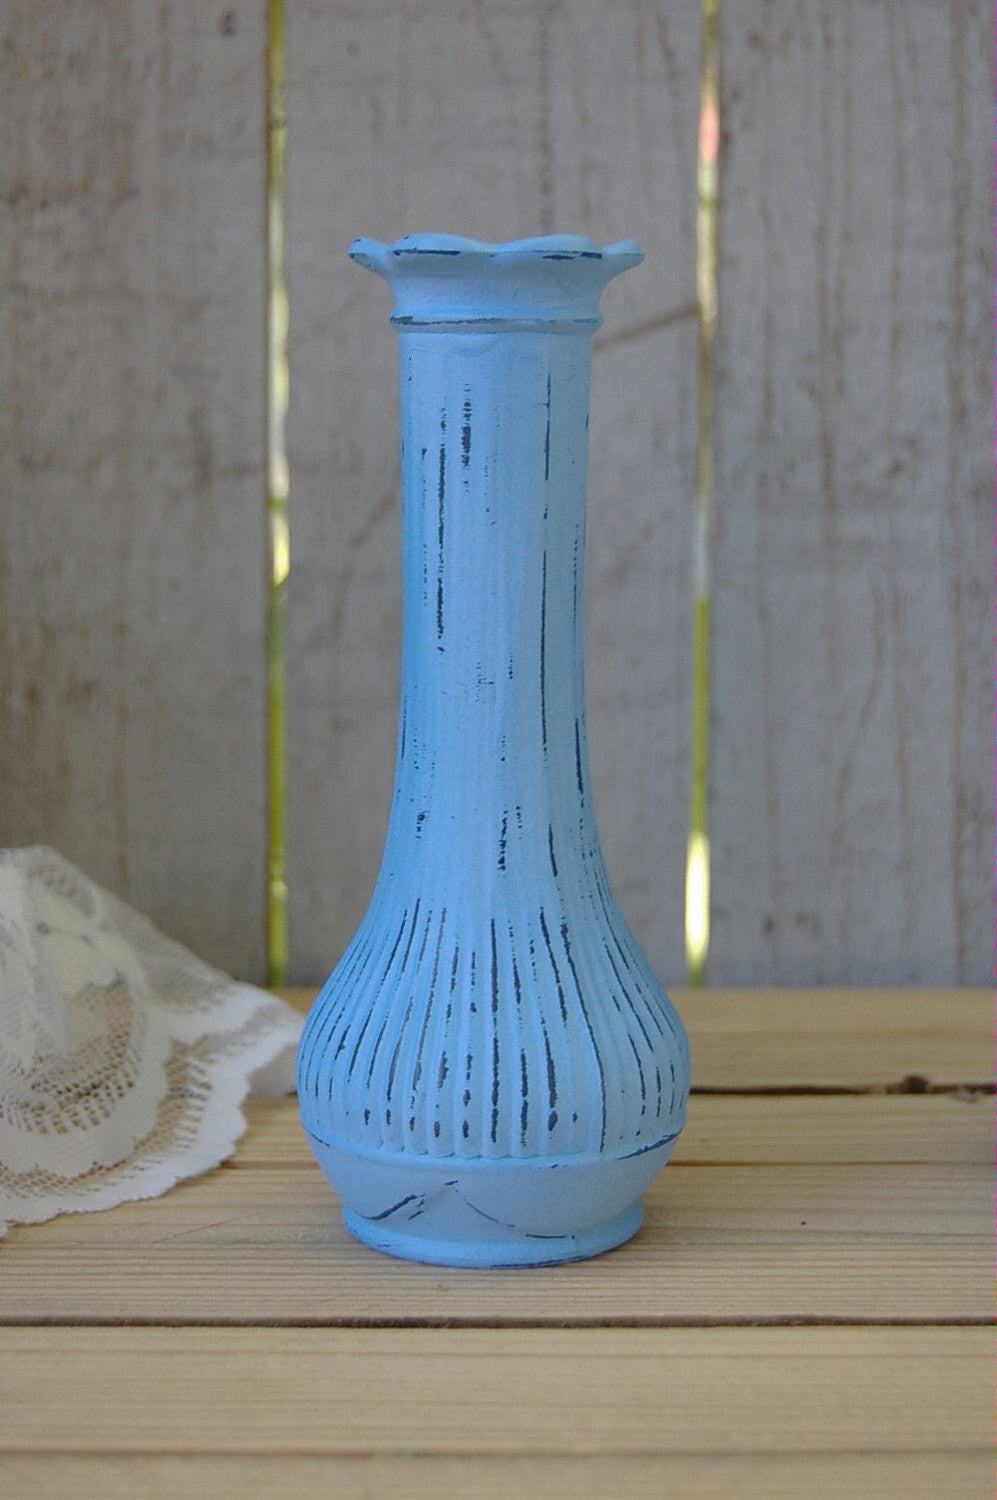 Blue shabby chic vase set - The Vintage Artistry